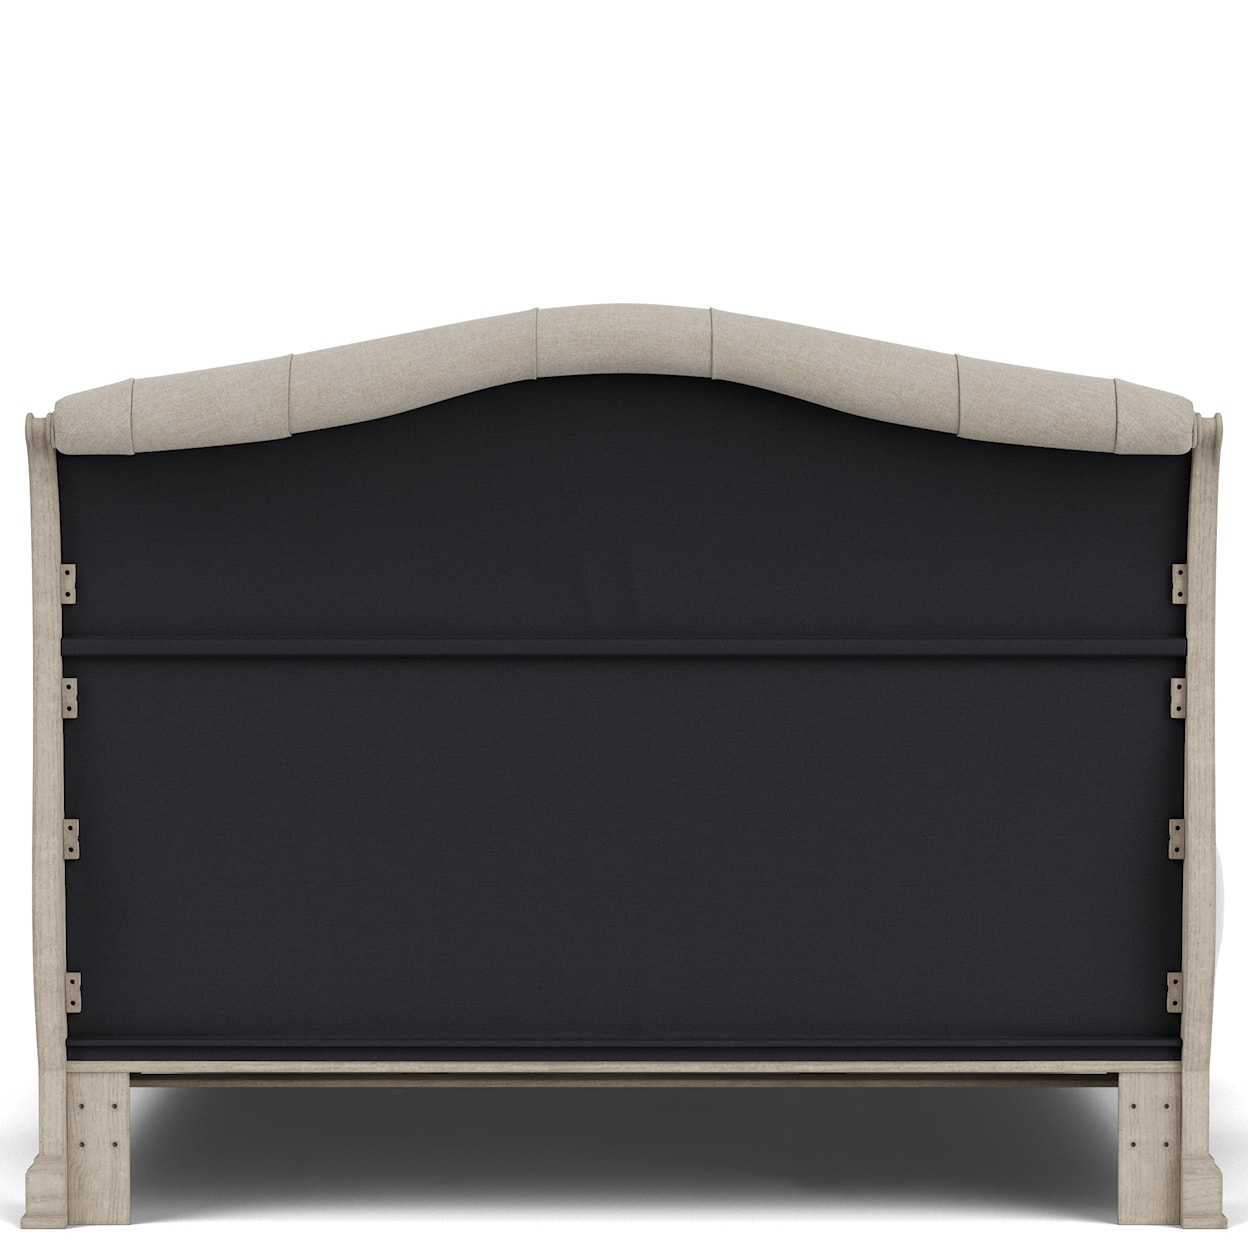 Riverside Furniture Kensington Queen Sleigh Bed with Upholstered Headboard